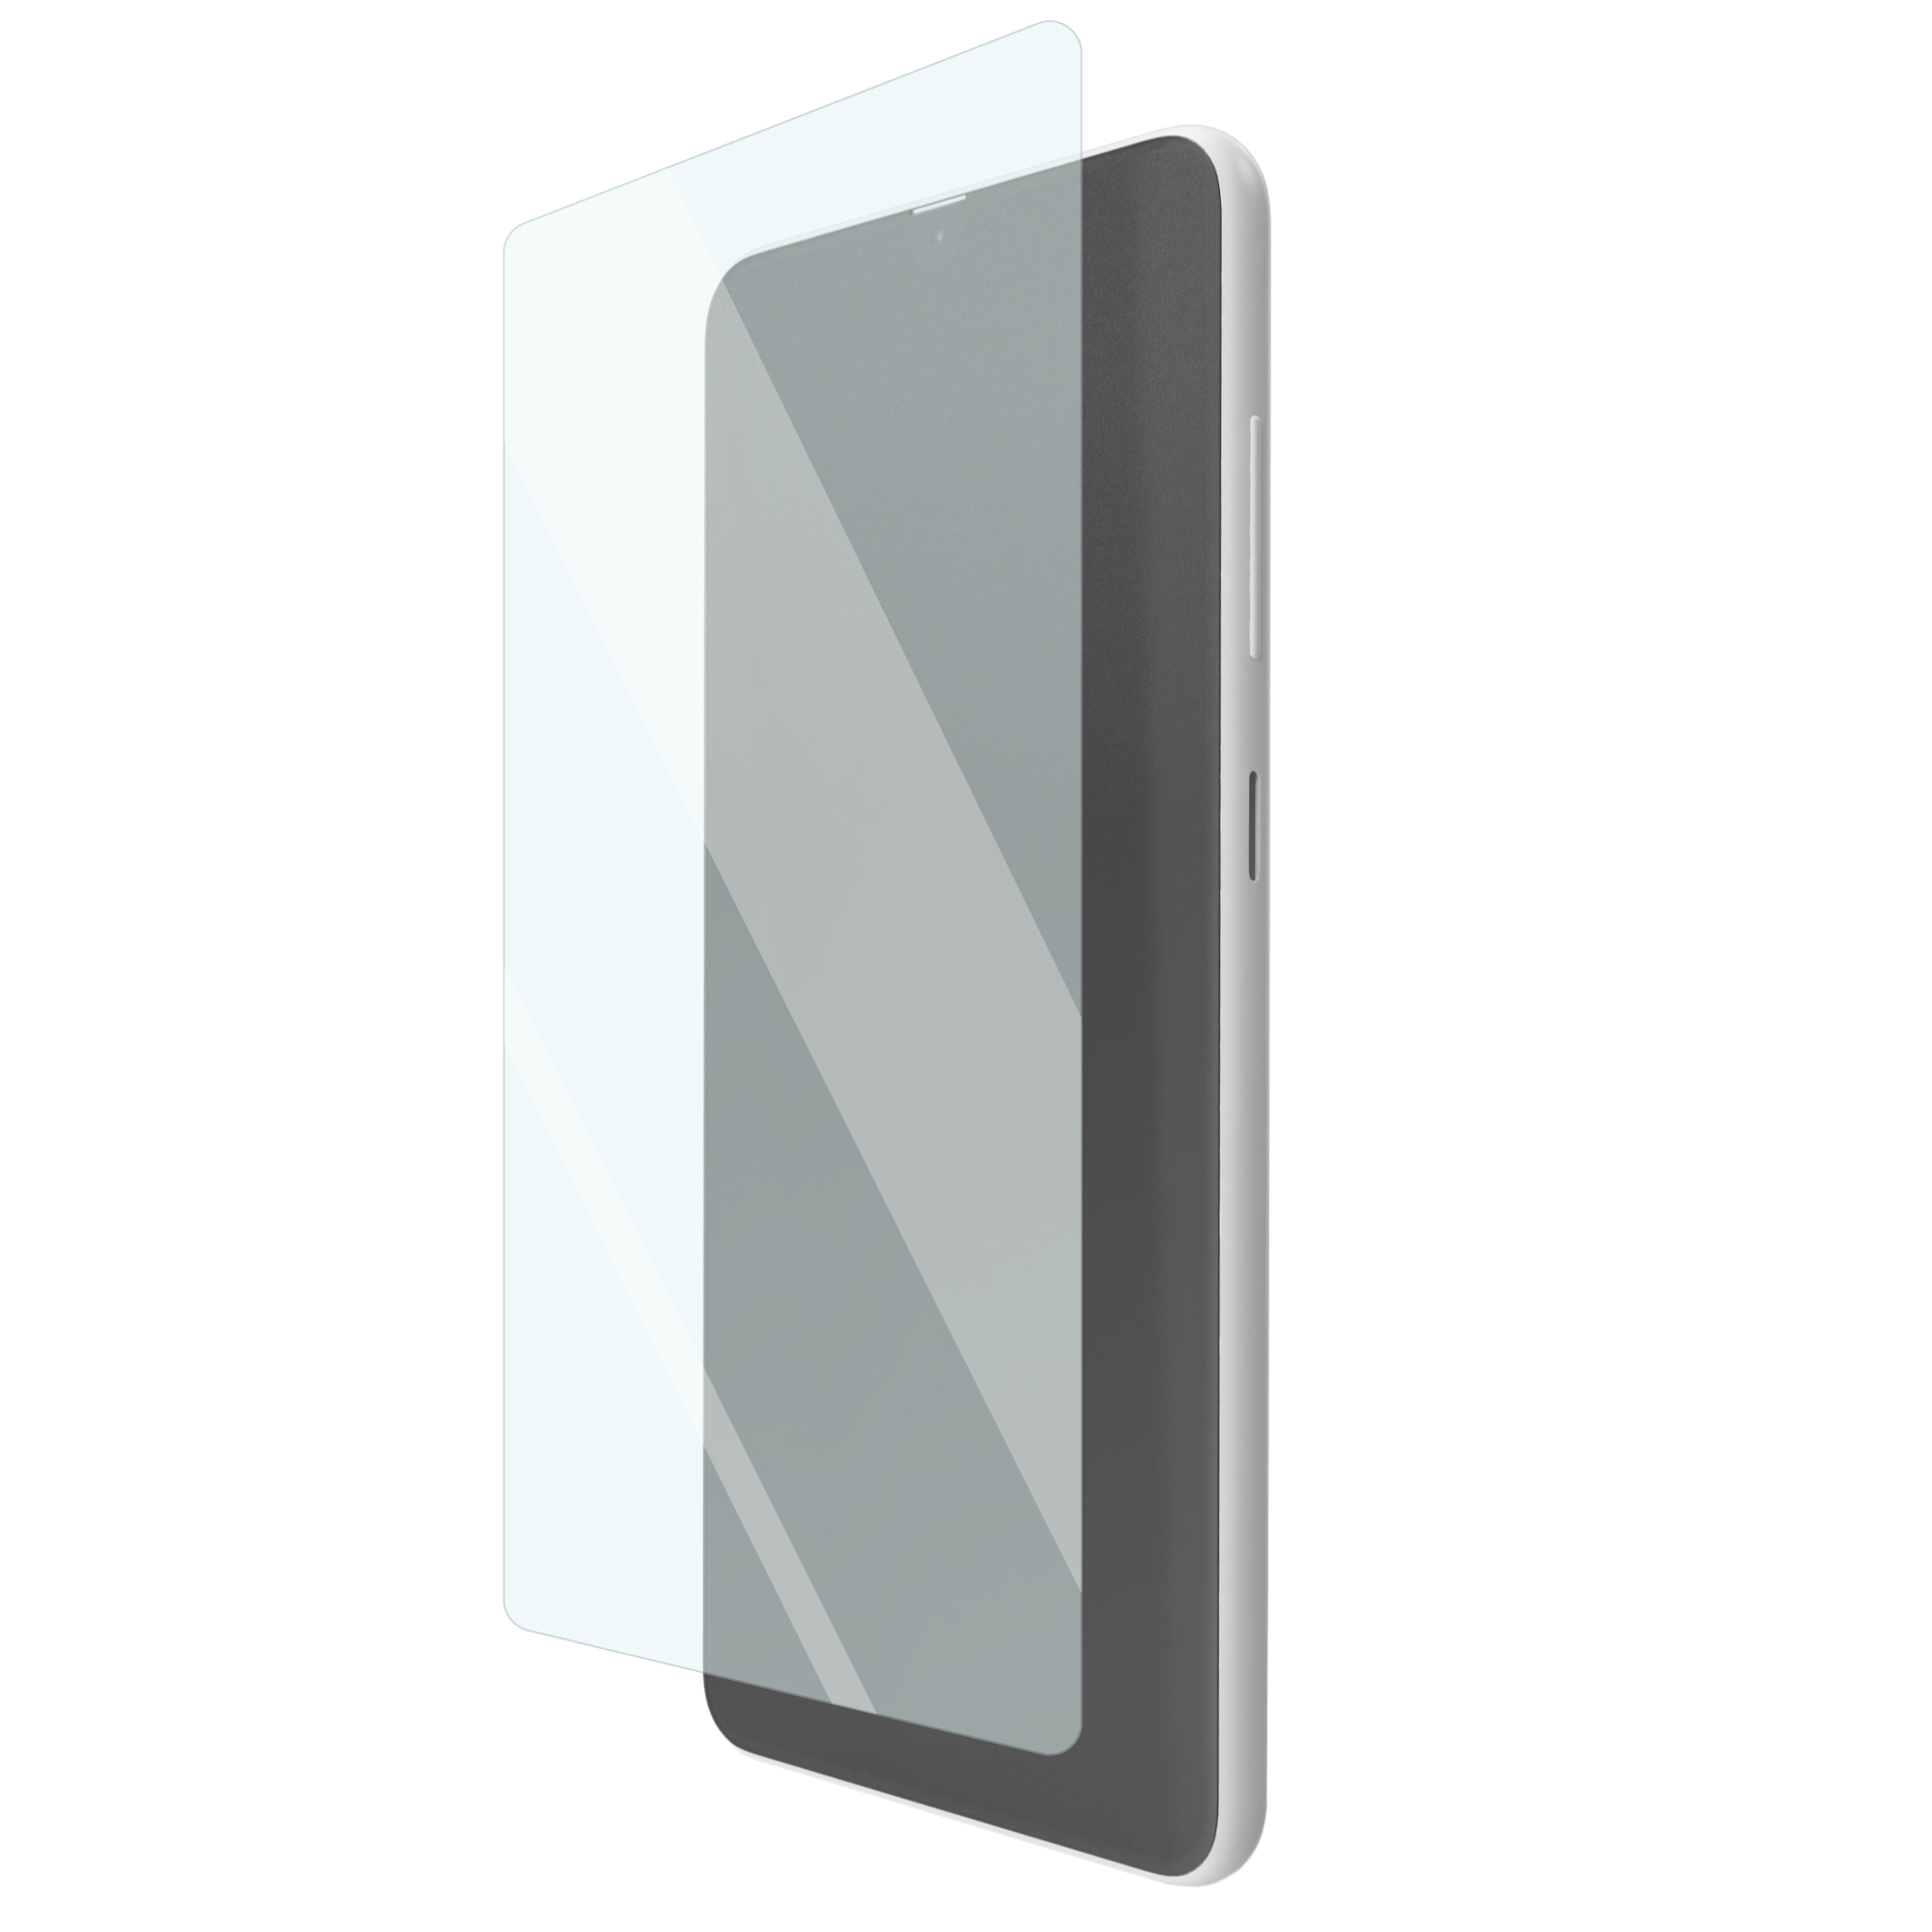 Folie de protectie silicon ShieldUP HiTech Regenerable pentru Apple iPhone 11 Pro thumb